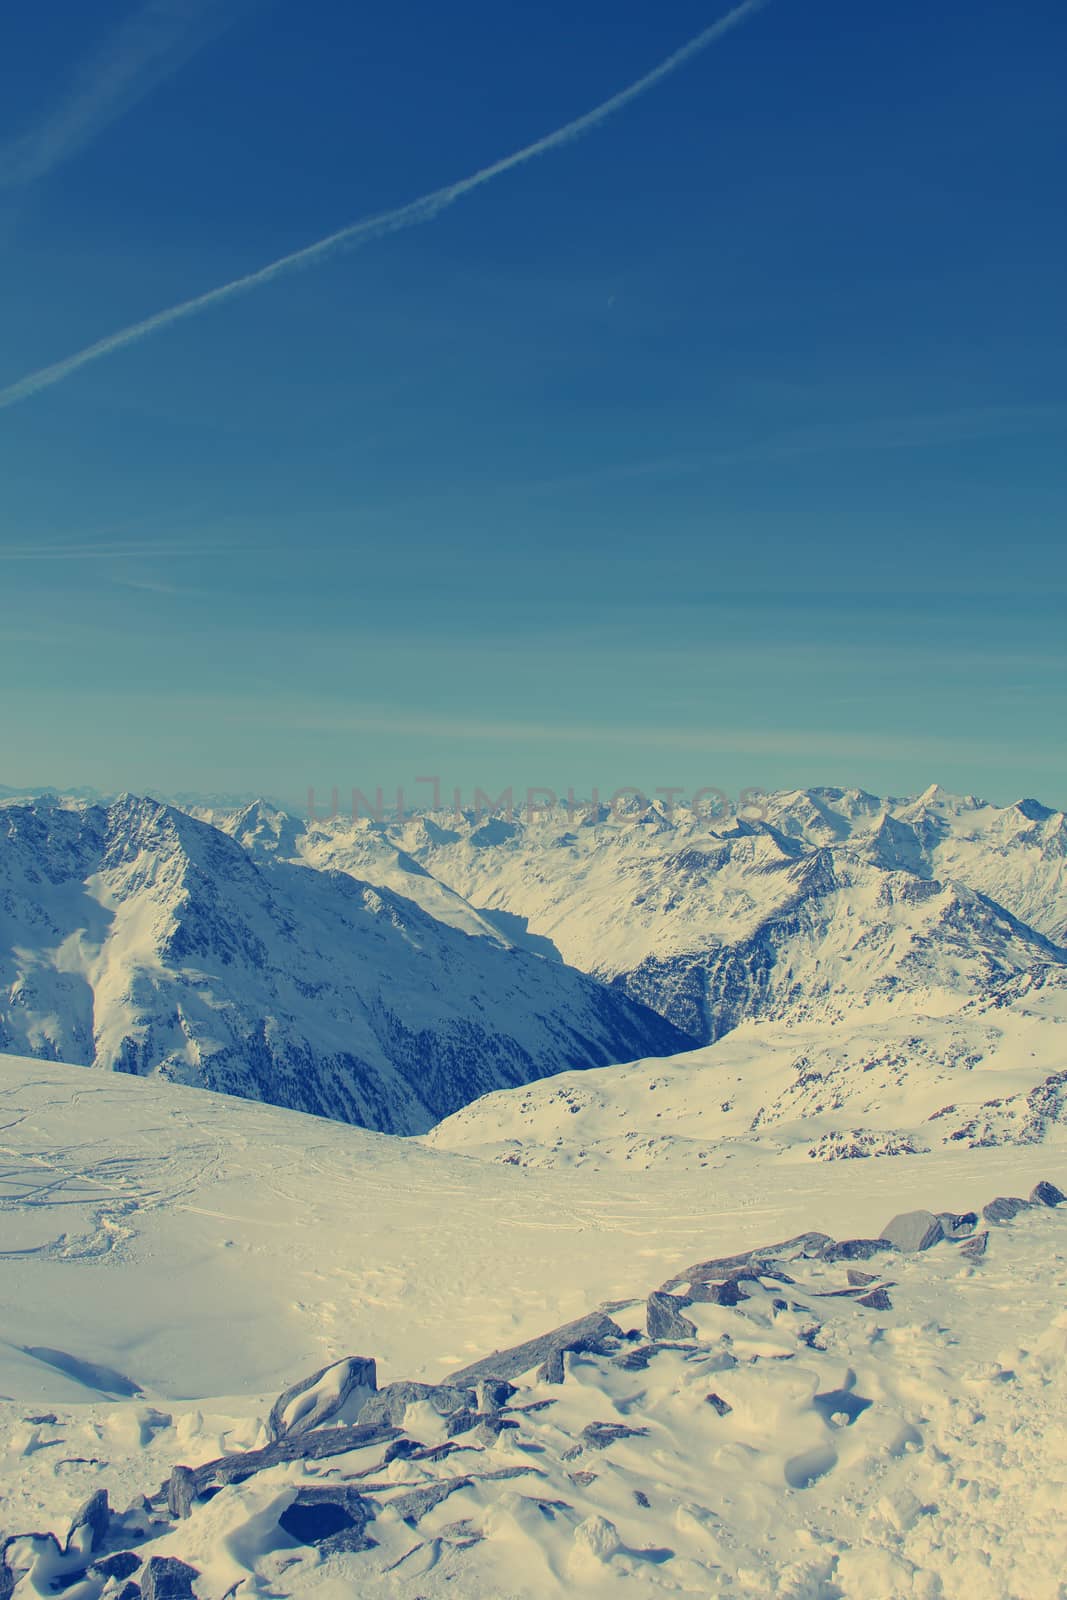 Peaks of the mountain range in winter, Alps, Austria